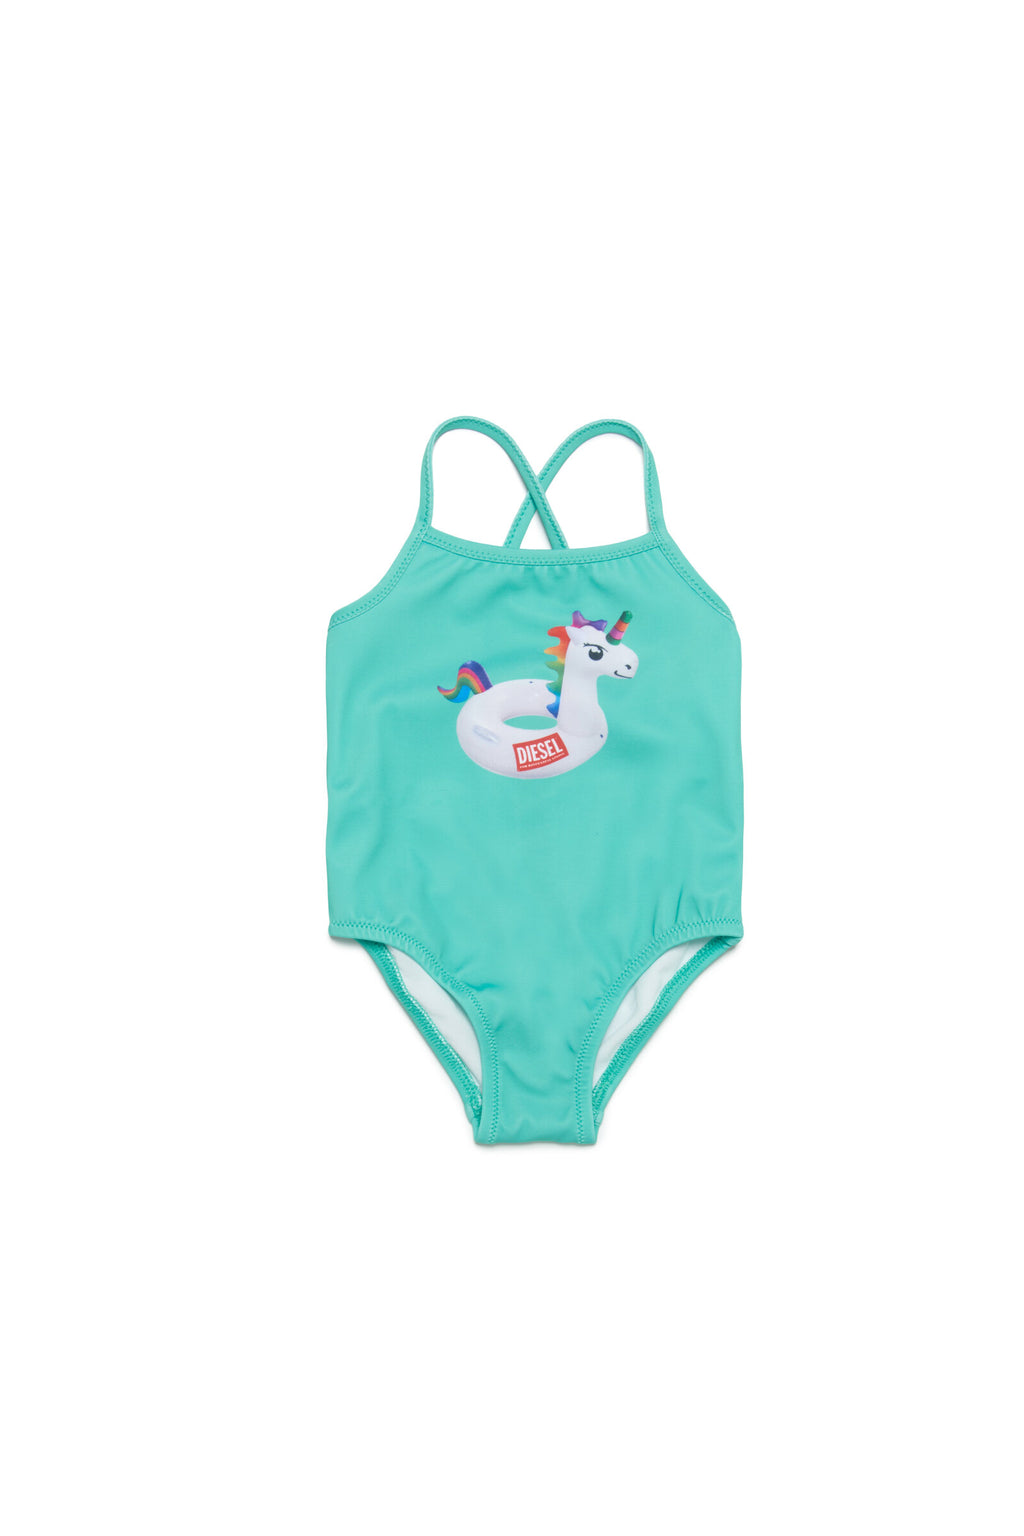 Green lycra one-piece swimsuit with unicorn print